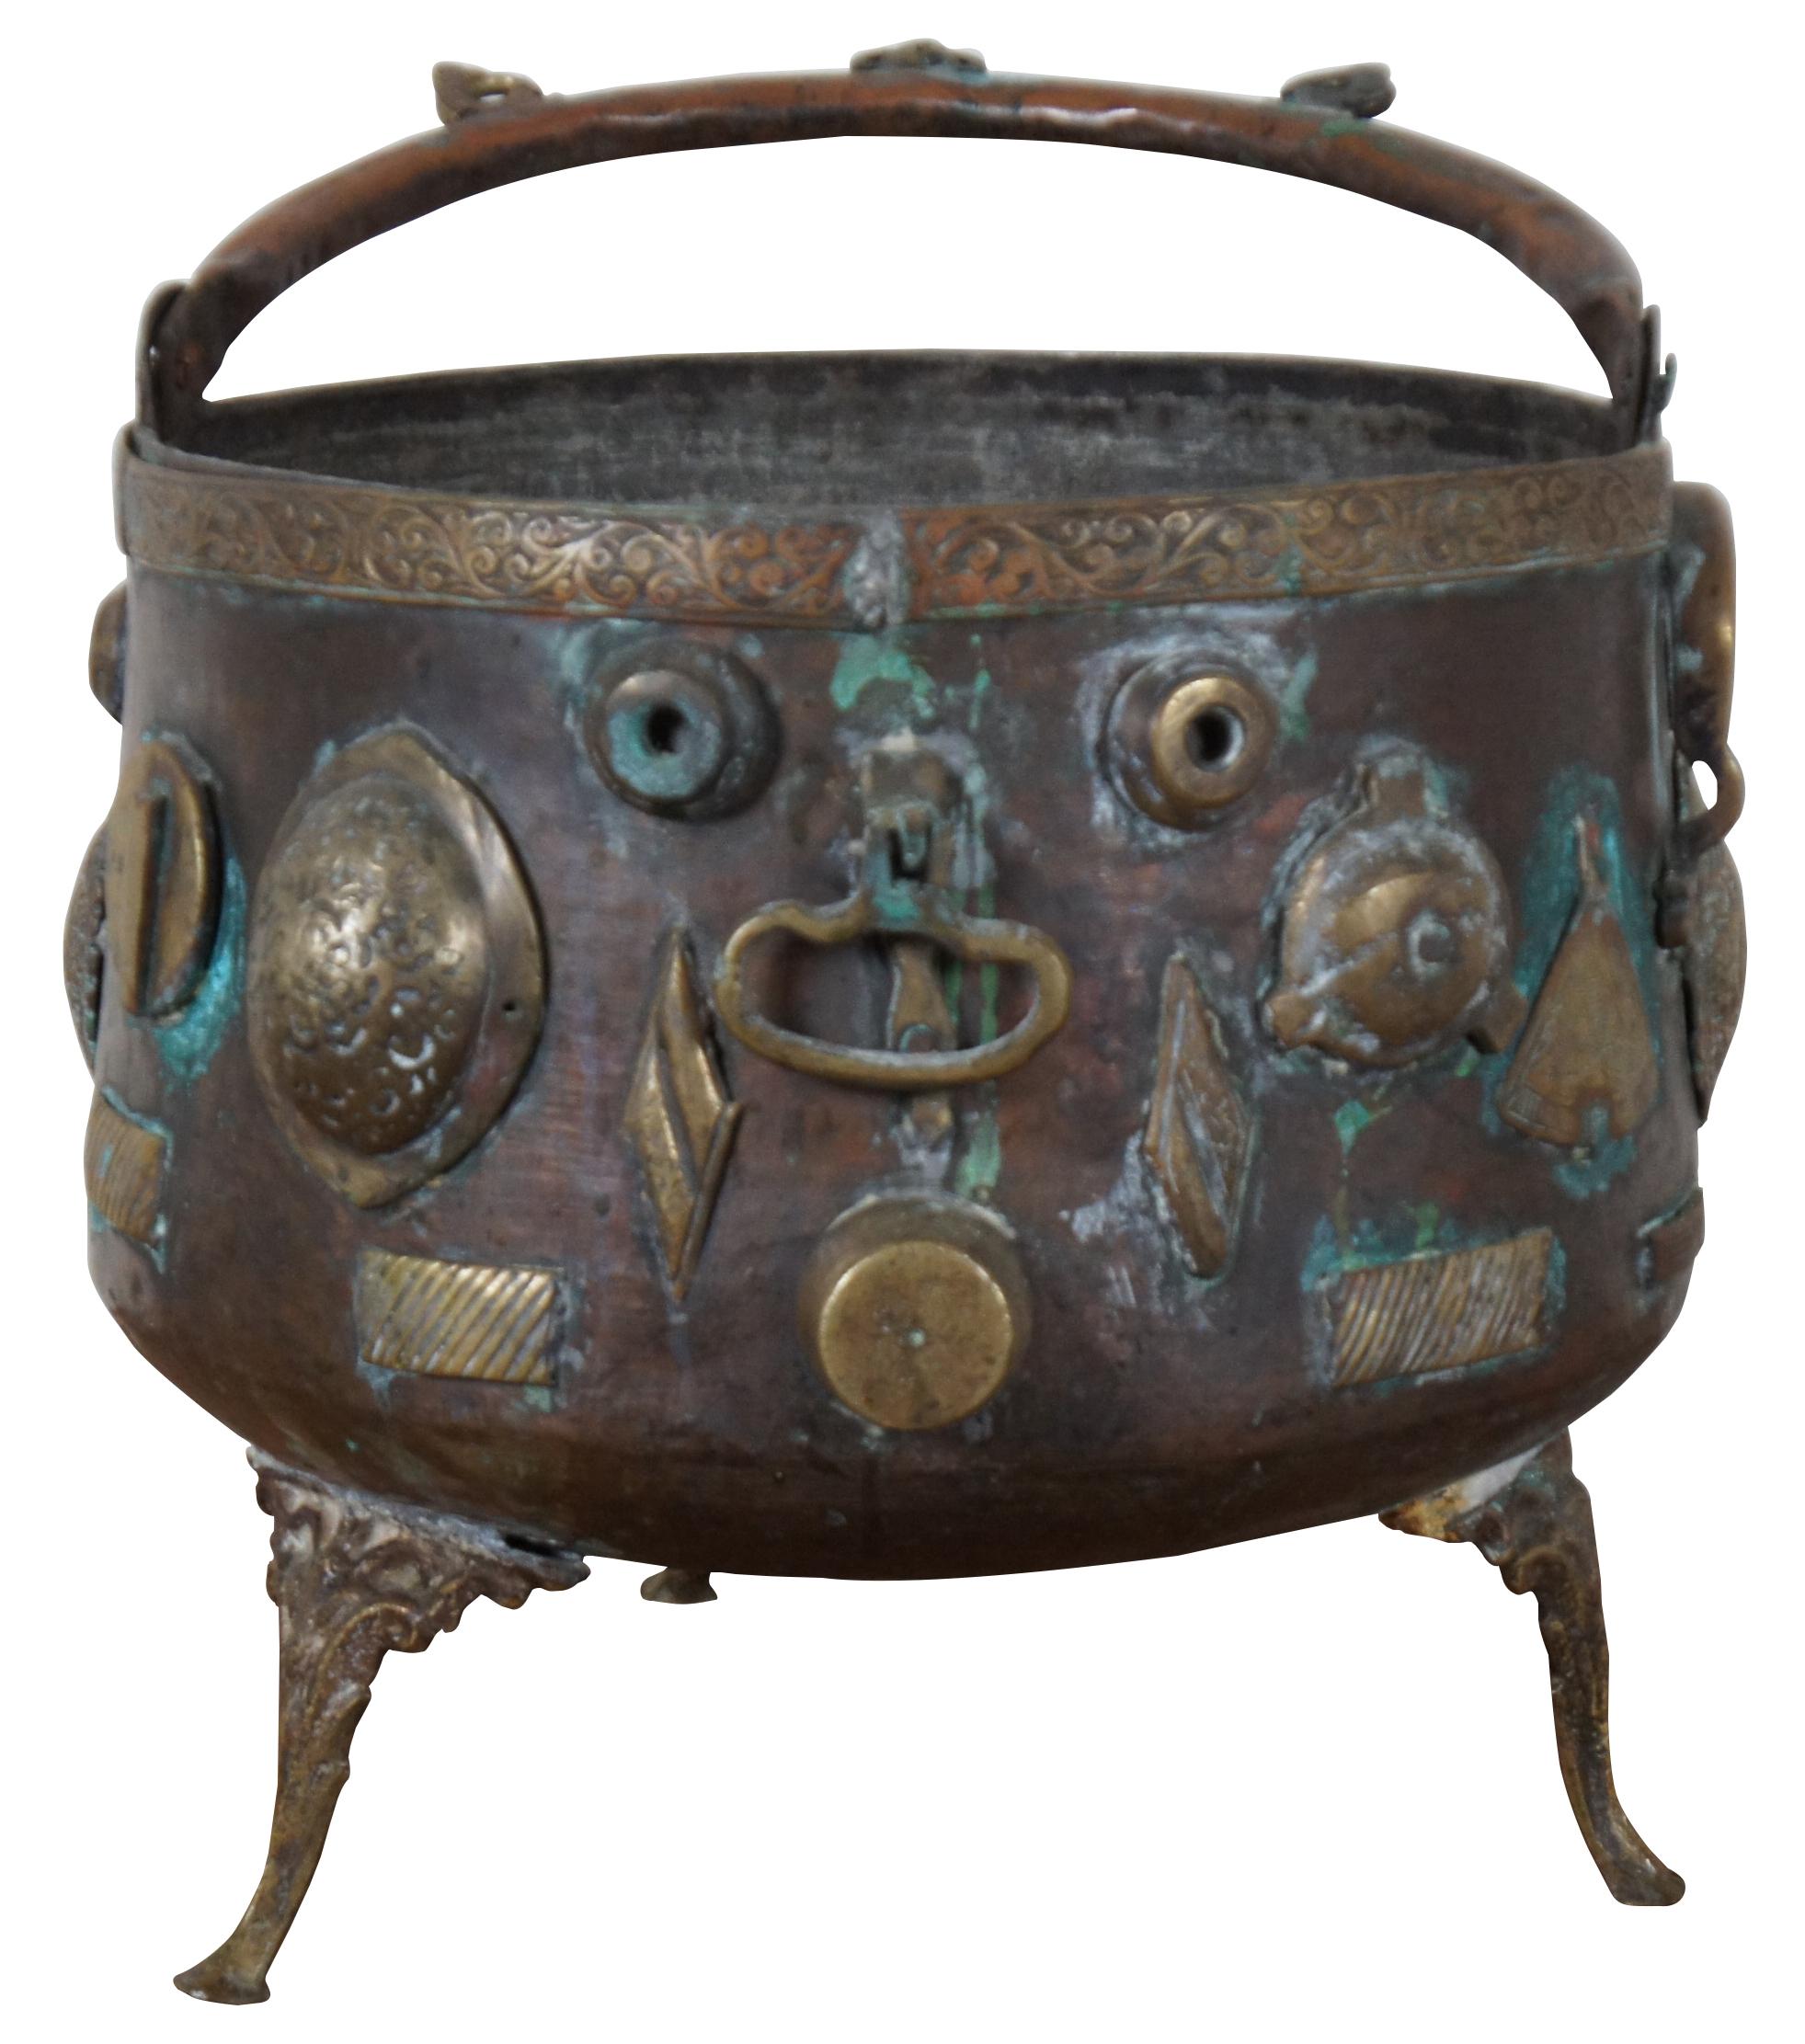 cauldron shaped purse